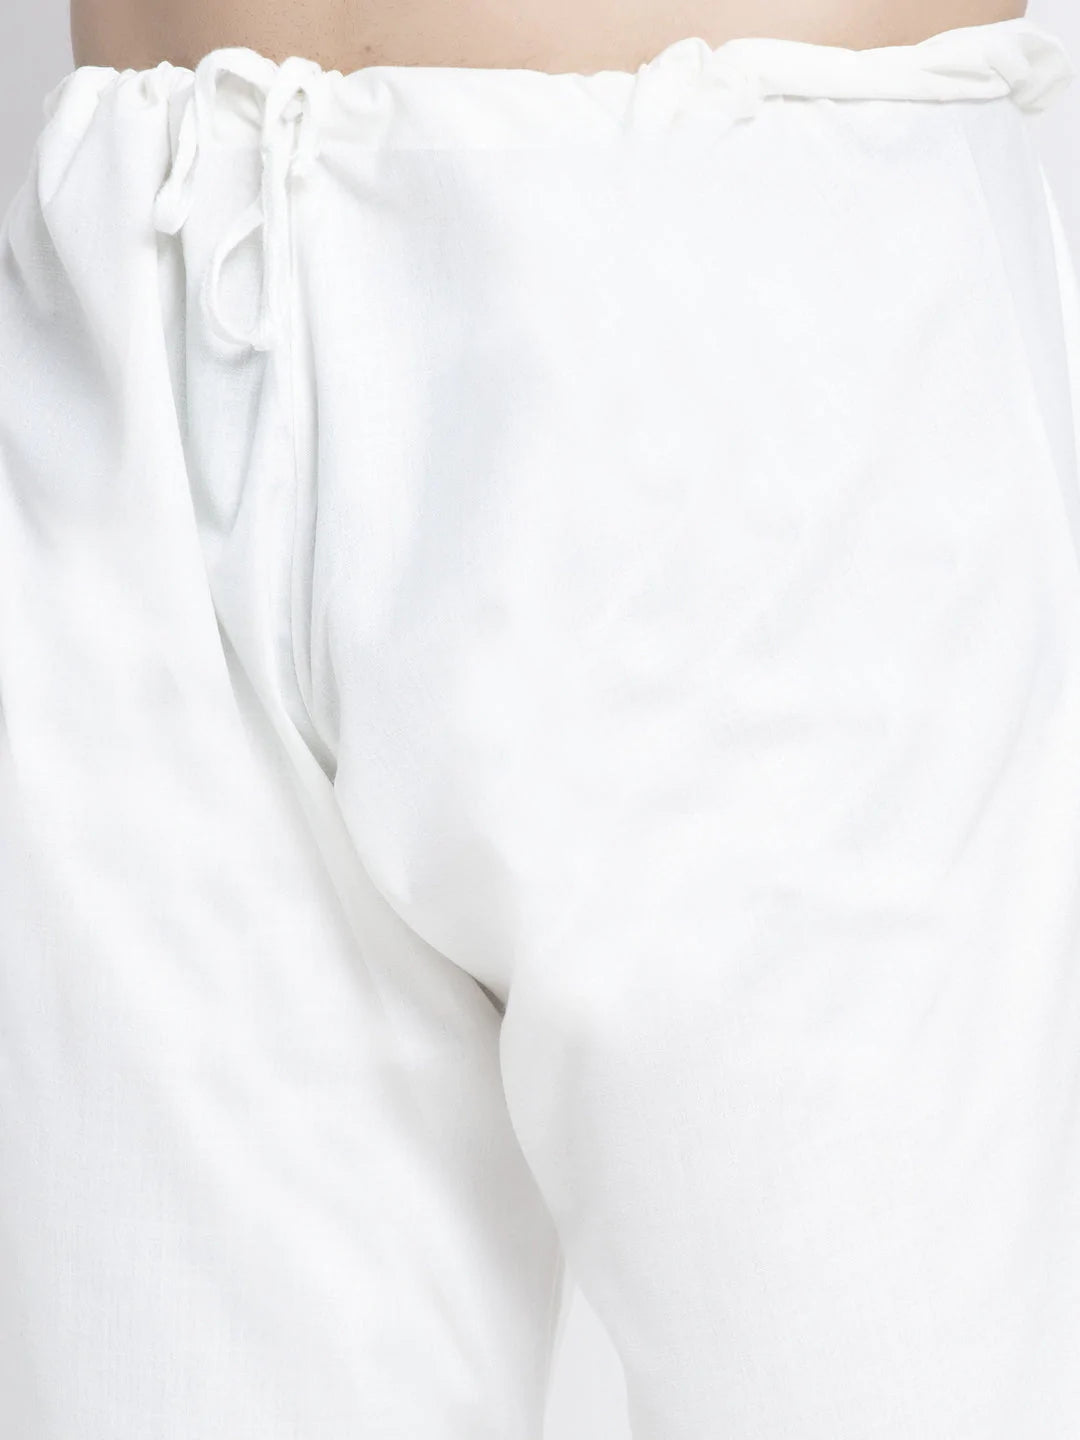 Jompers Men's Solid White Cotton Kurta Payjama with Solid Maroon Waistcoat ( JOKPWC OW-F 4021 Maroon )